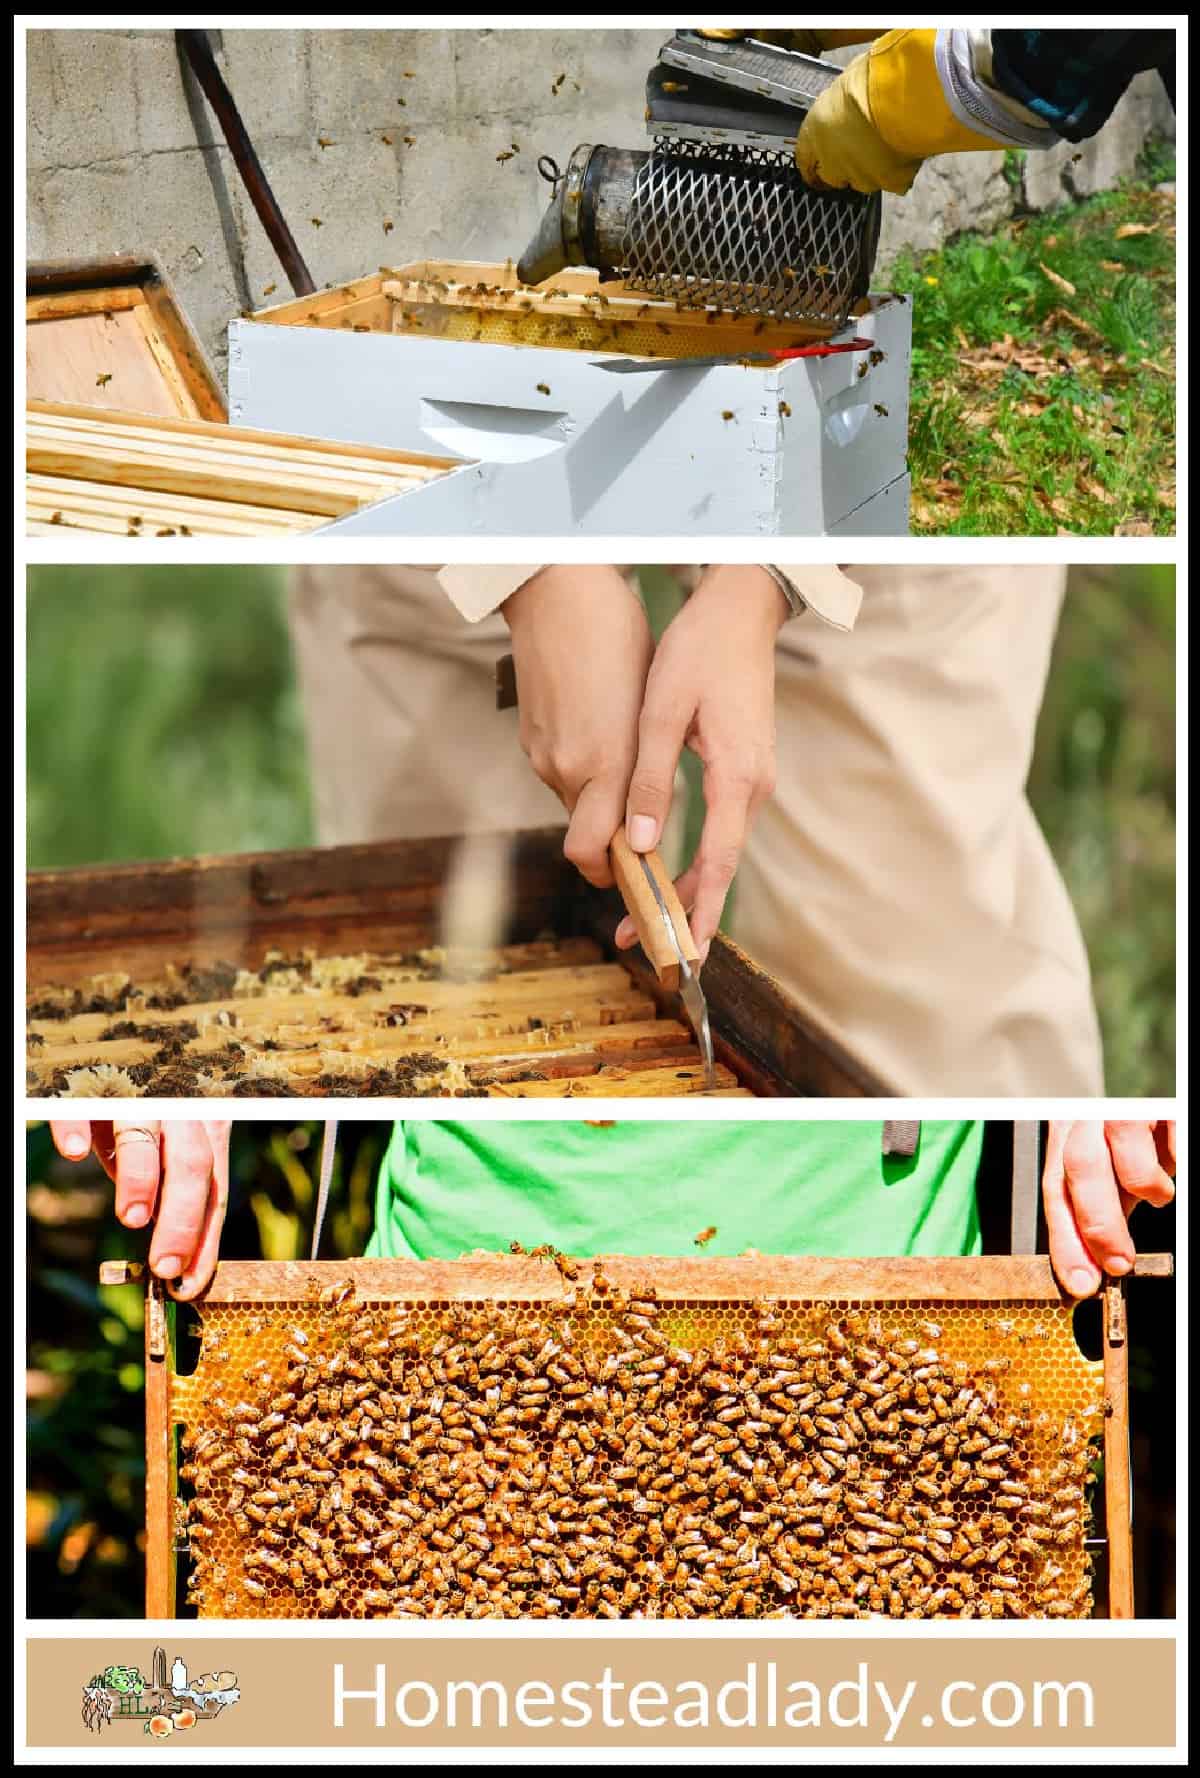 frame full of honey, bee keeper working a hive, bee smoker